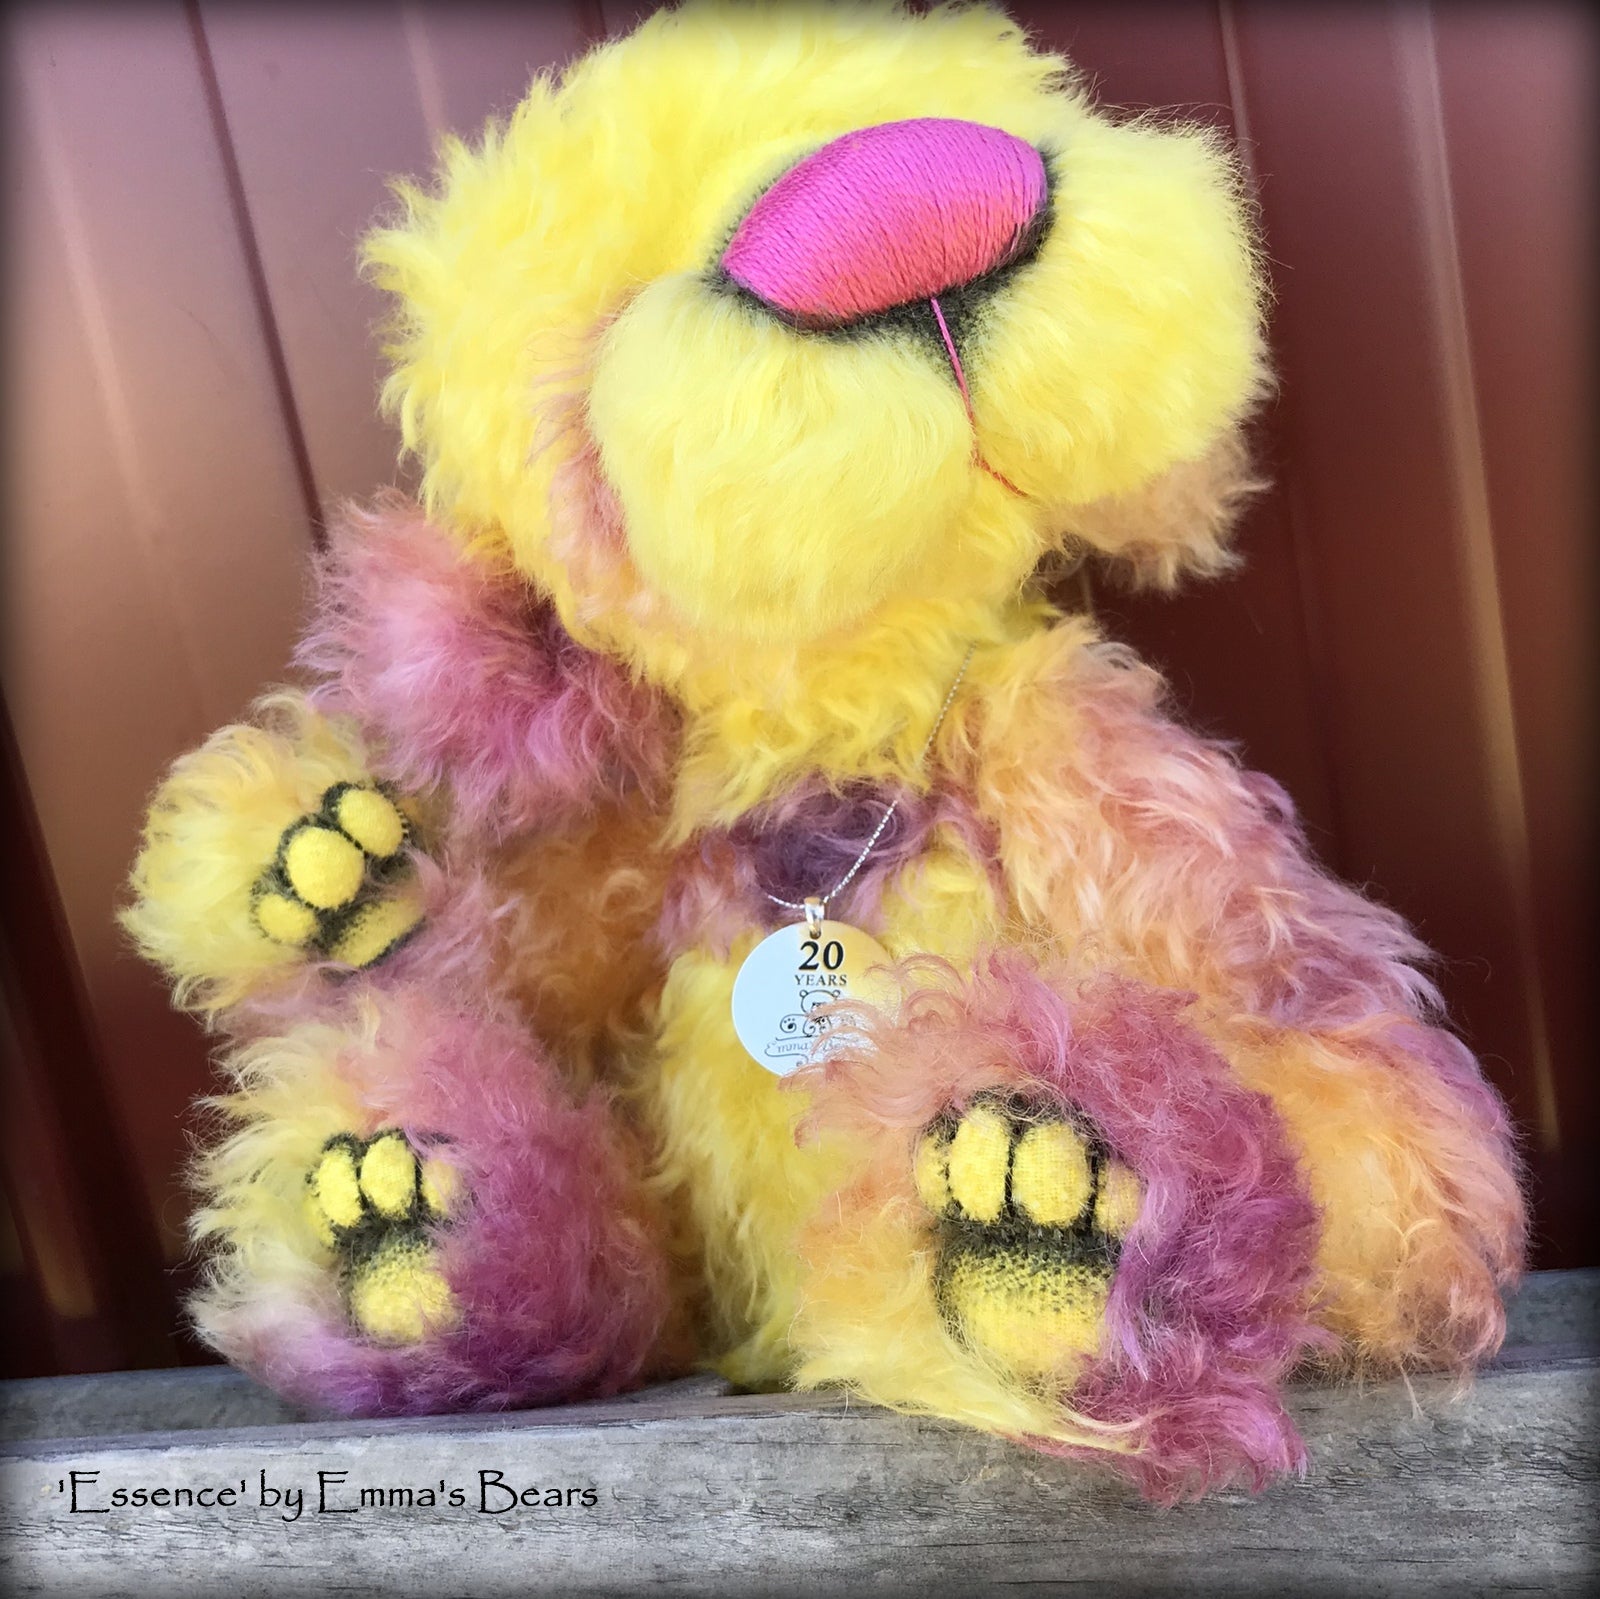 Essence - 20 Years of Emma's Bears Commemorative Teddy - OOAK in a series